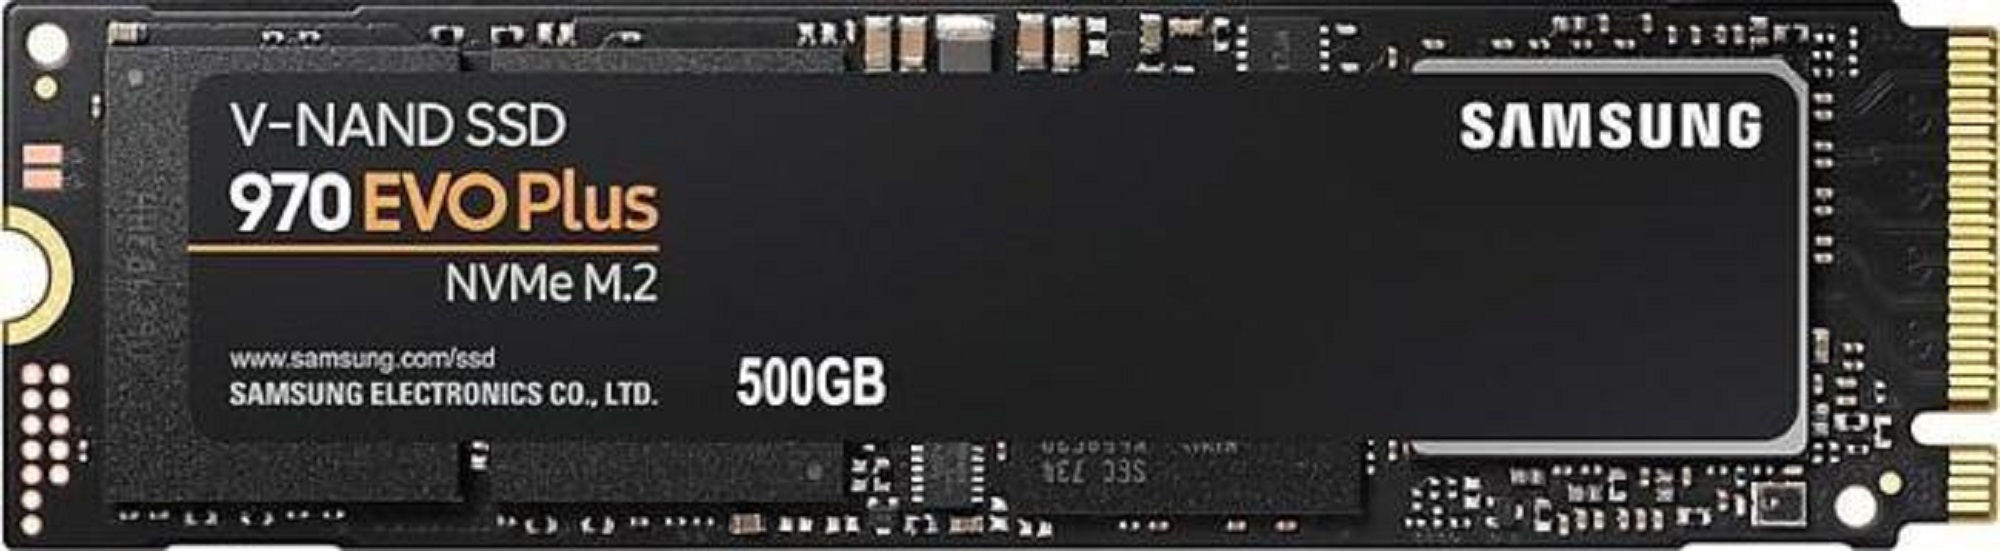 Накопитель SSD SAMSUNG 970 EVO Plus 500GB M.2 NVMe (MZ-V7S500BW) в Киеве